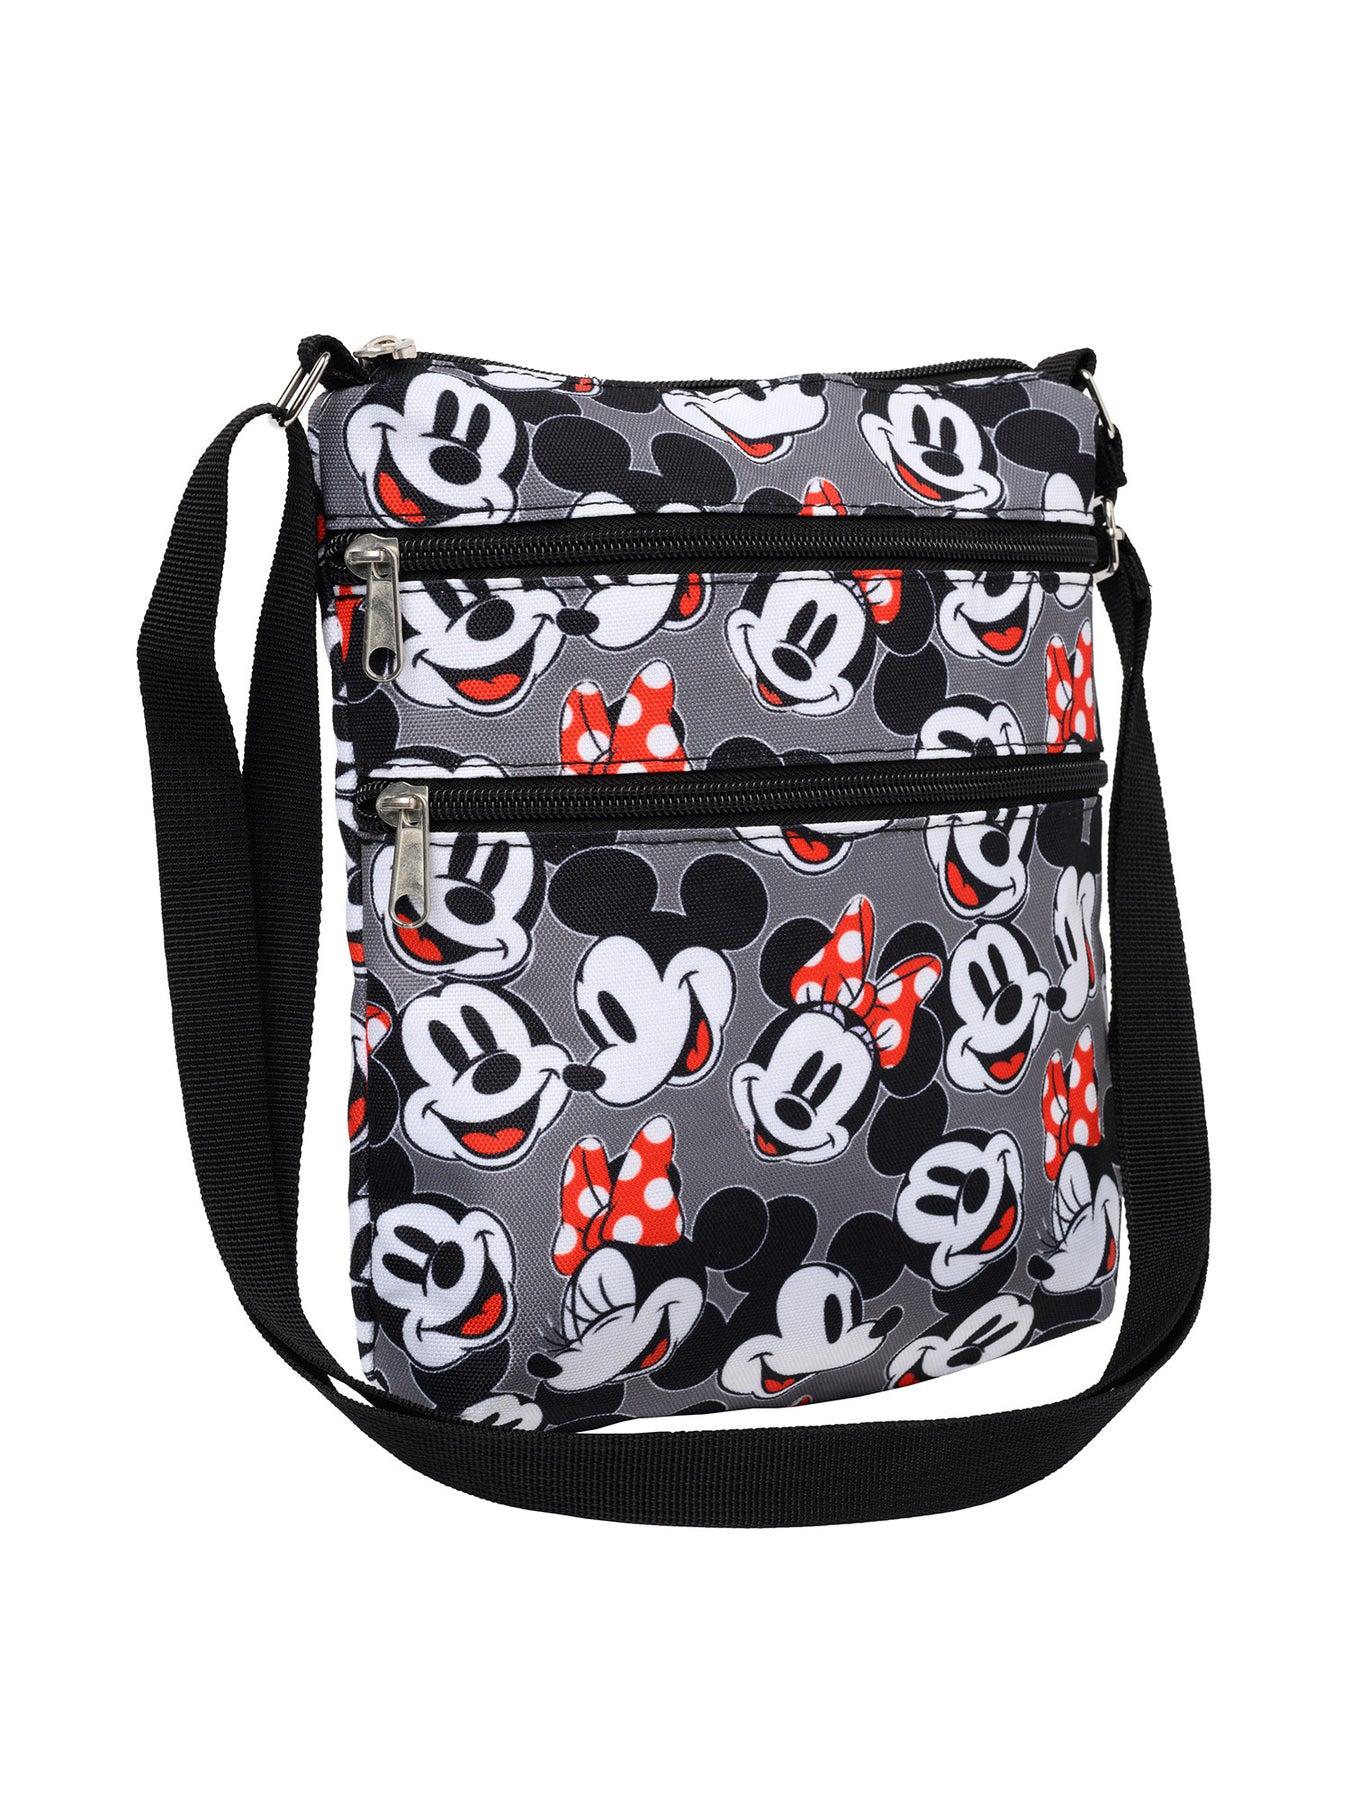 New Fashion Women girl Mickey Handbag Shoulder Bag Purse Tote Messenger  Hobo Bag #Unbranded #ShoulderBag | Bags, Mickey mouse purse, Mickey mouse  fashion